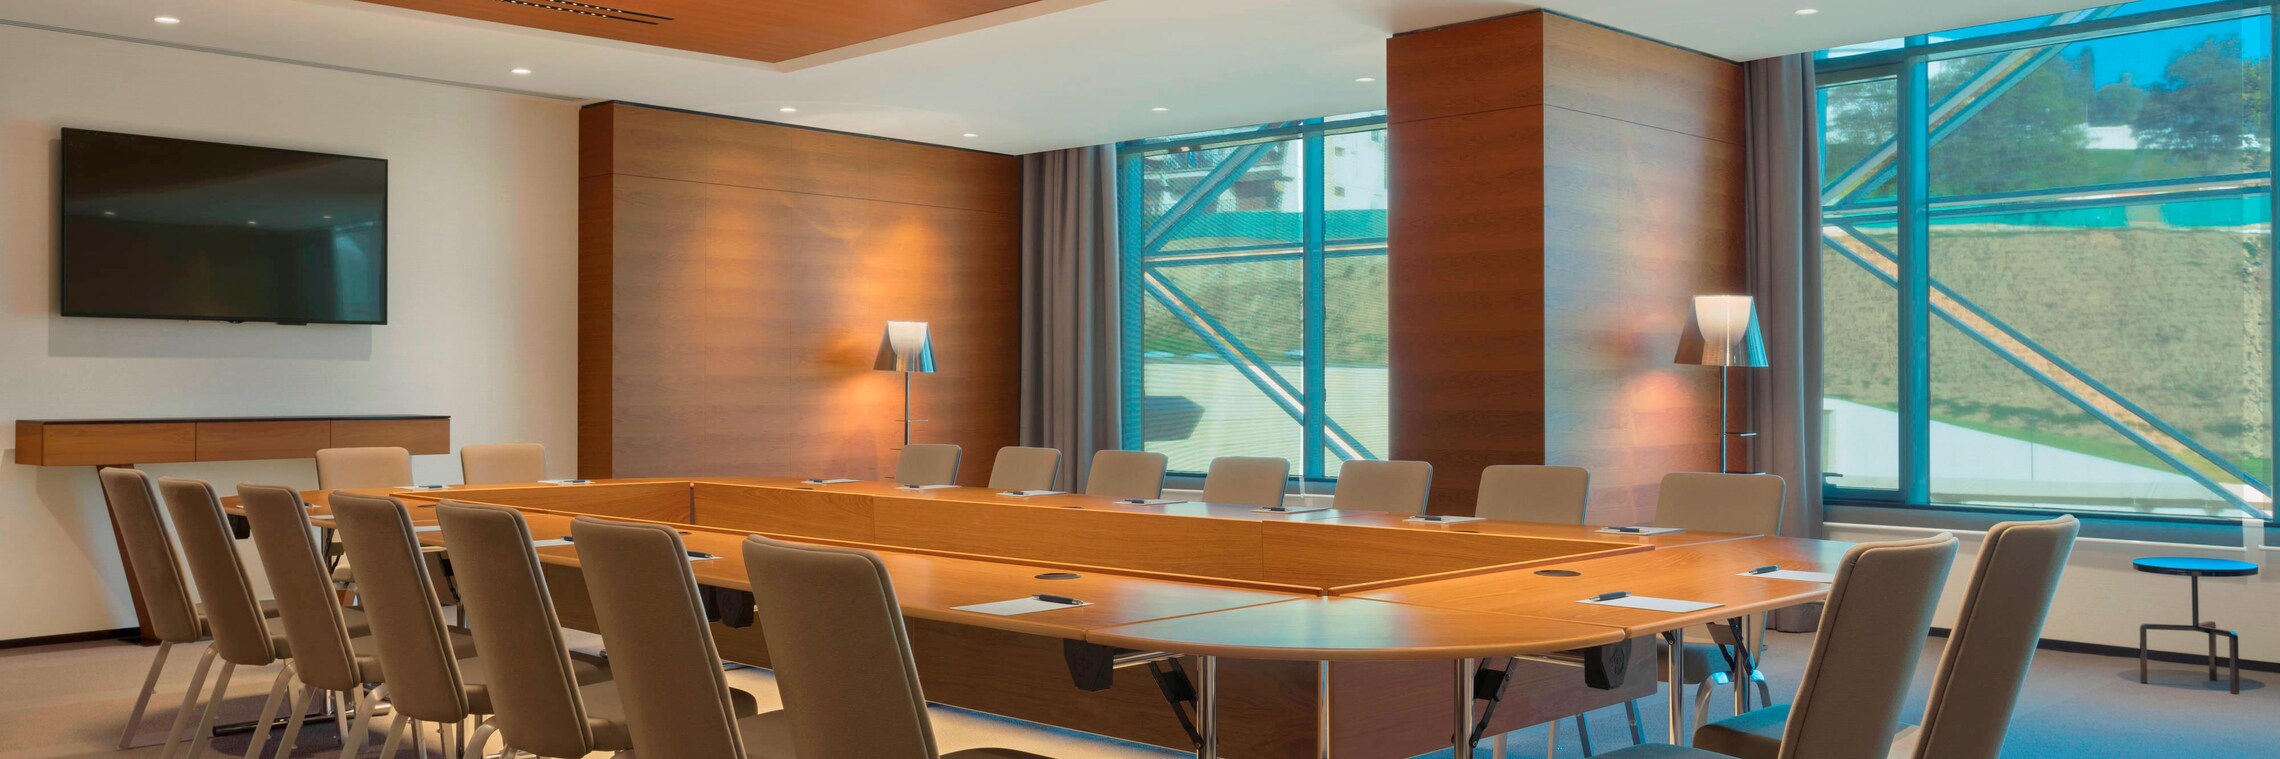 Argent Meeting Room - Boardroom Setup